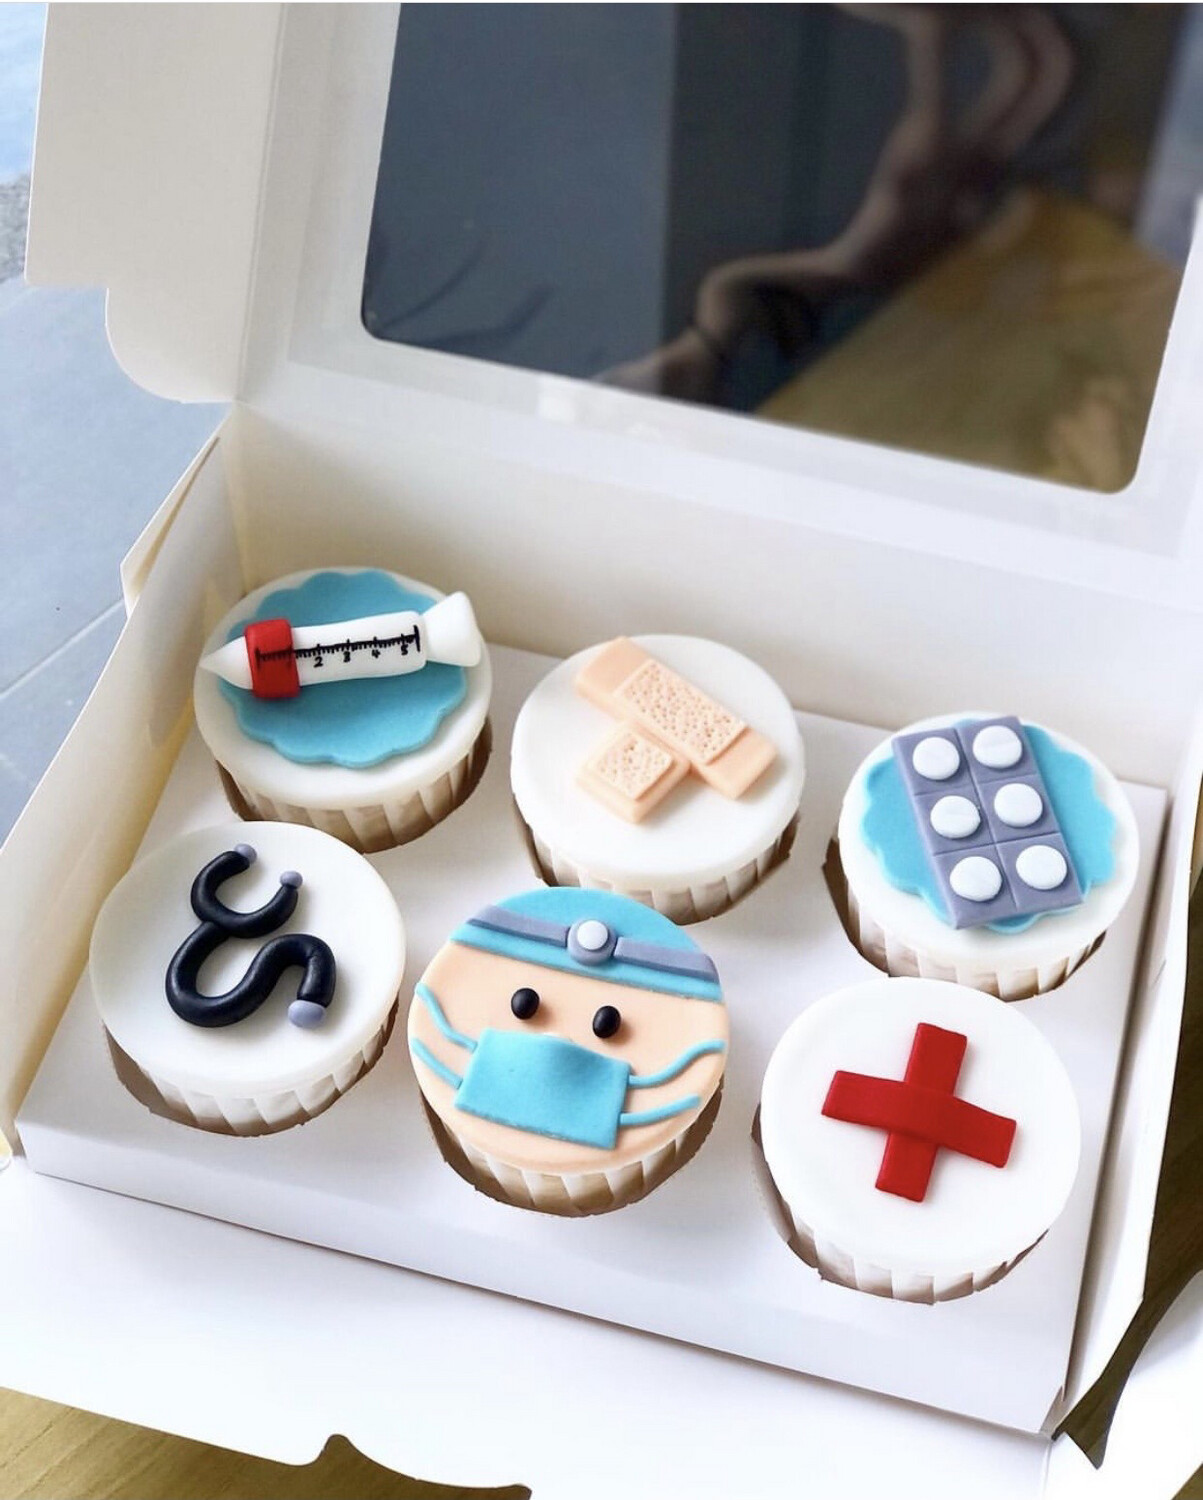 I’m Doctor Nurse Cupcakes